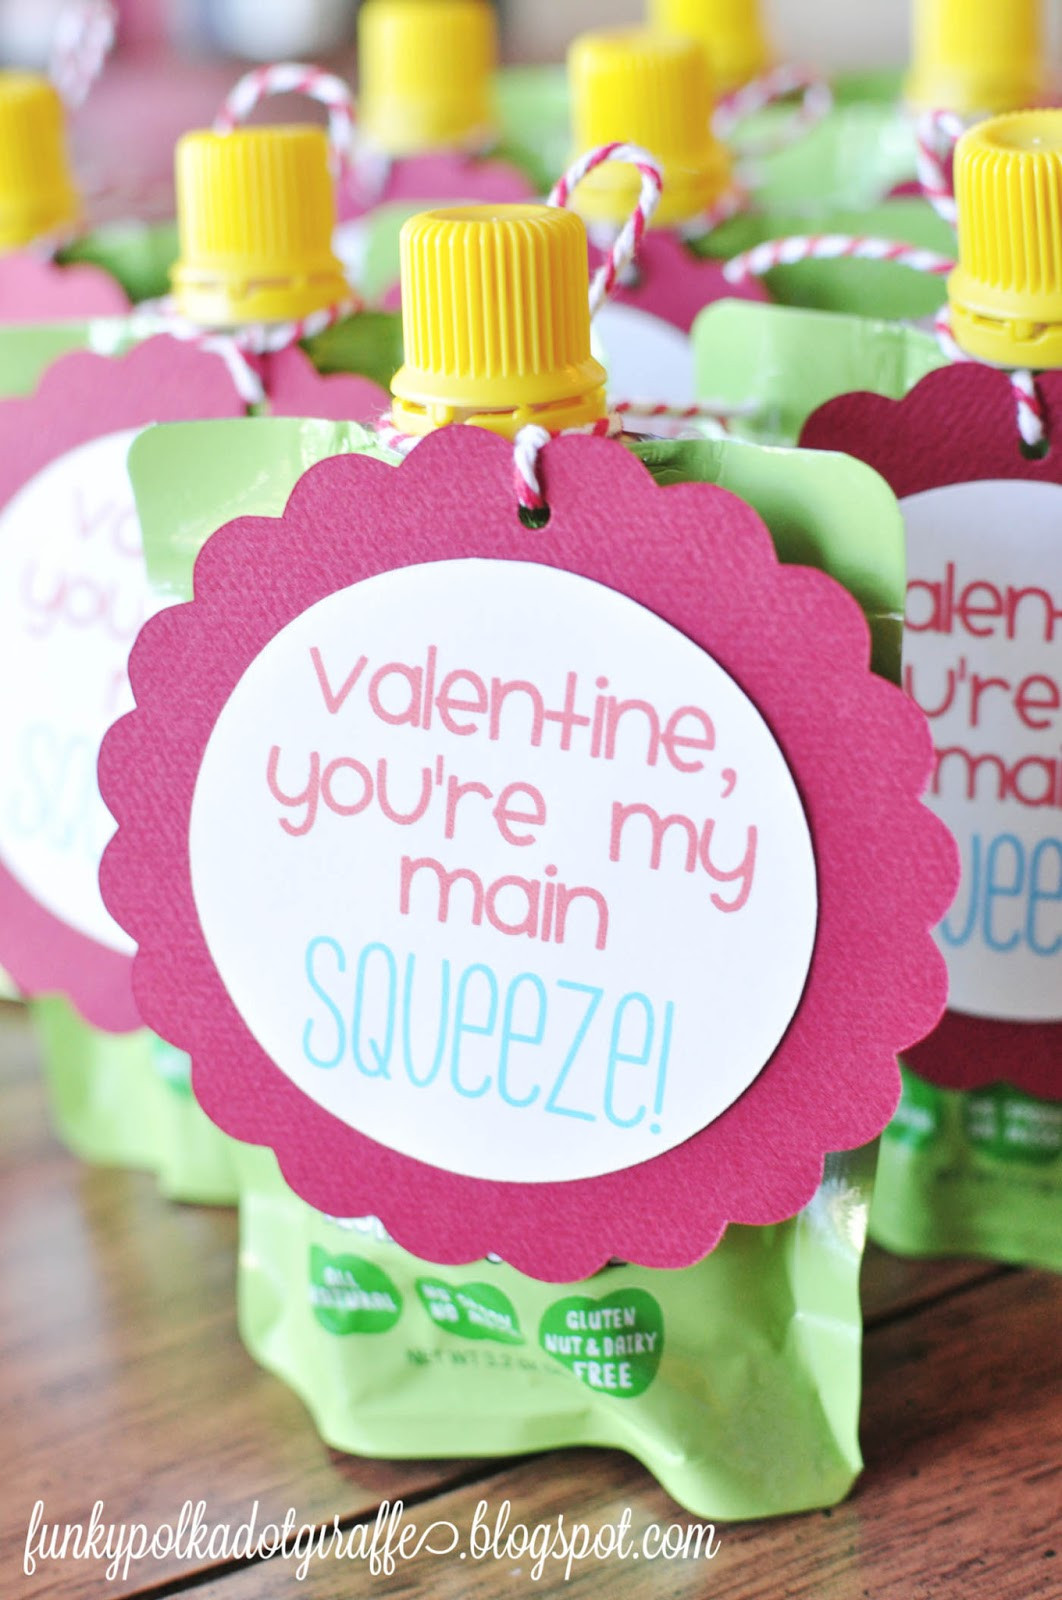 Preschool Valentine Gift Ideas
 Funky Polkadot Giraffe Preschool Valentines You re My